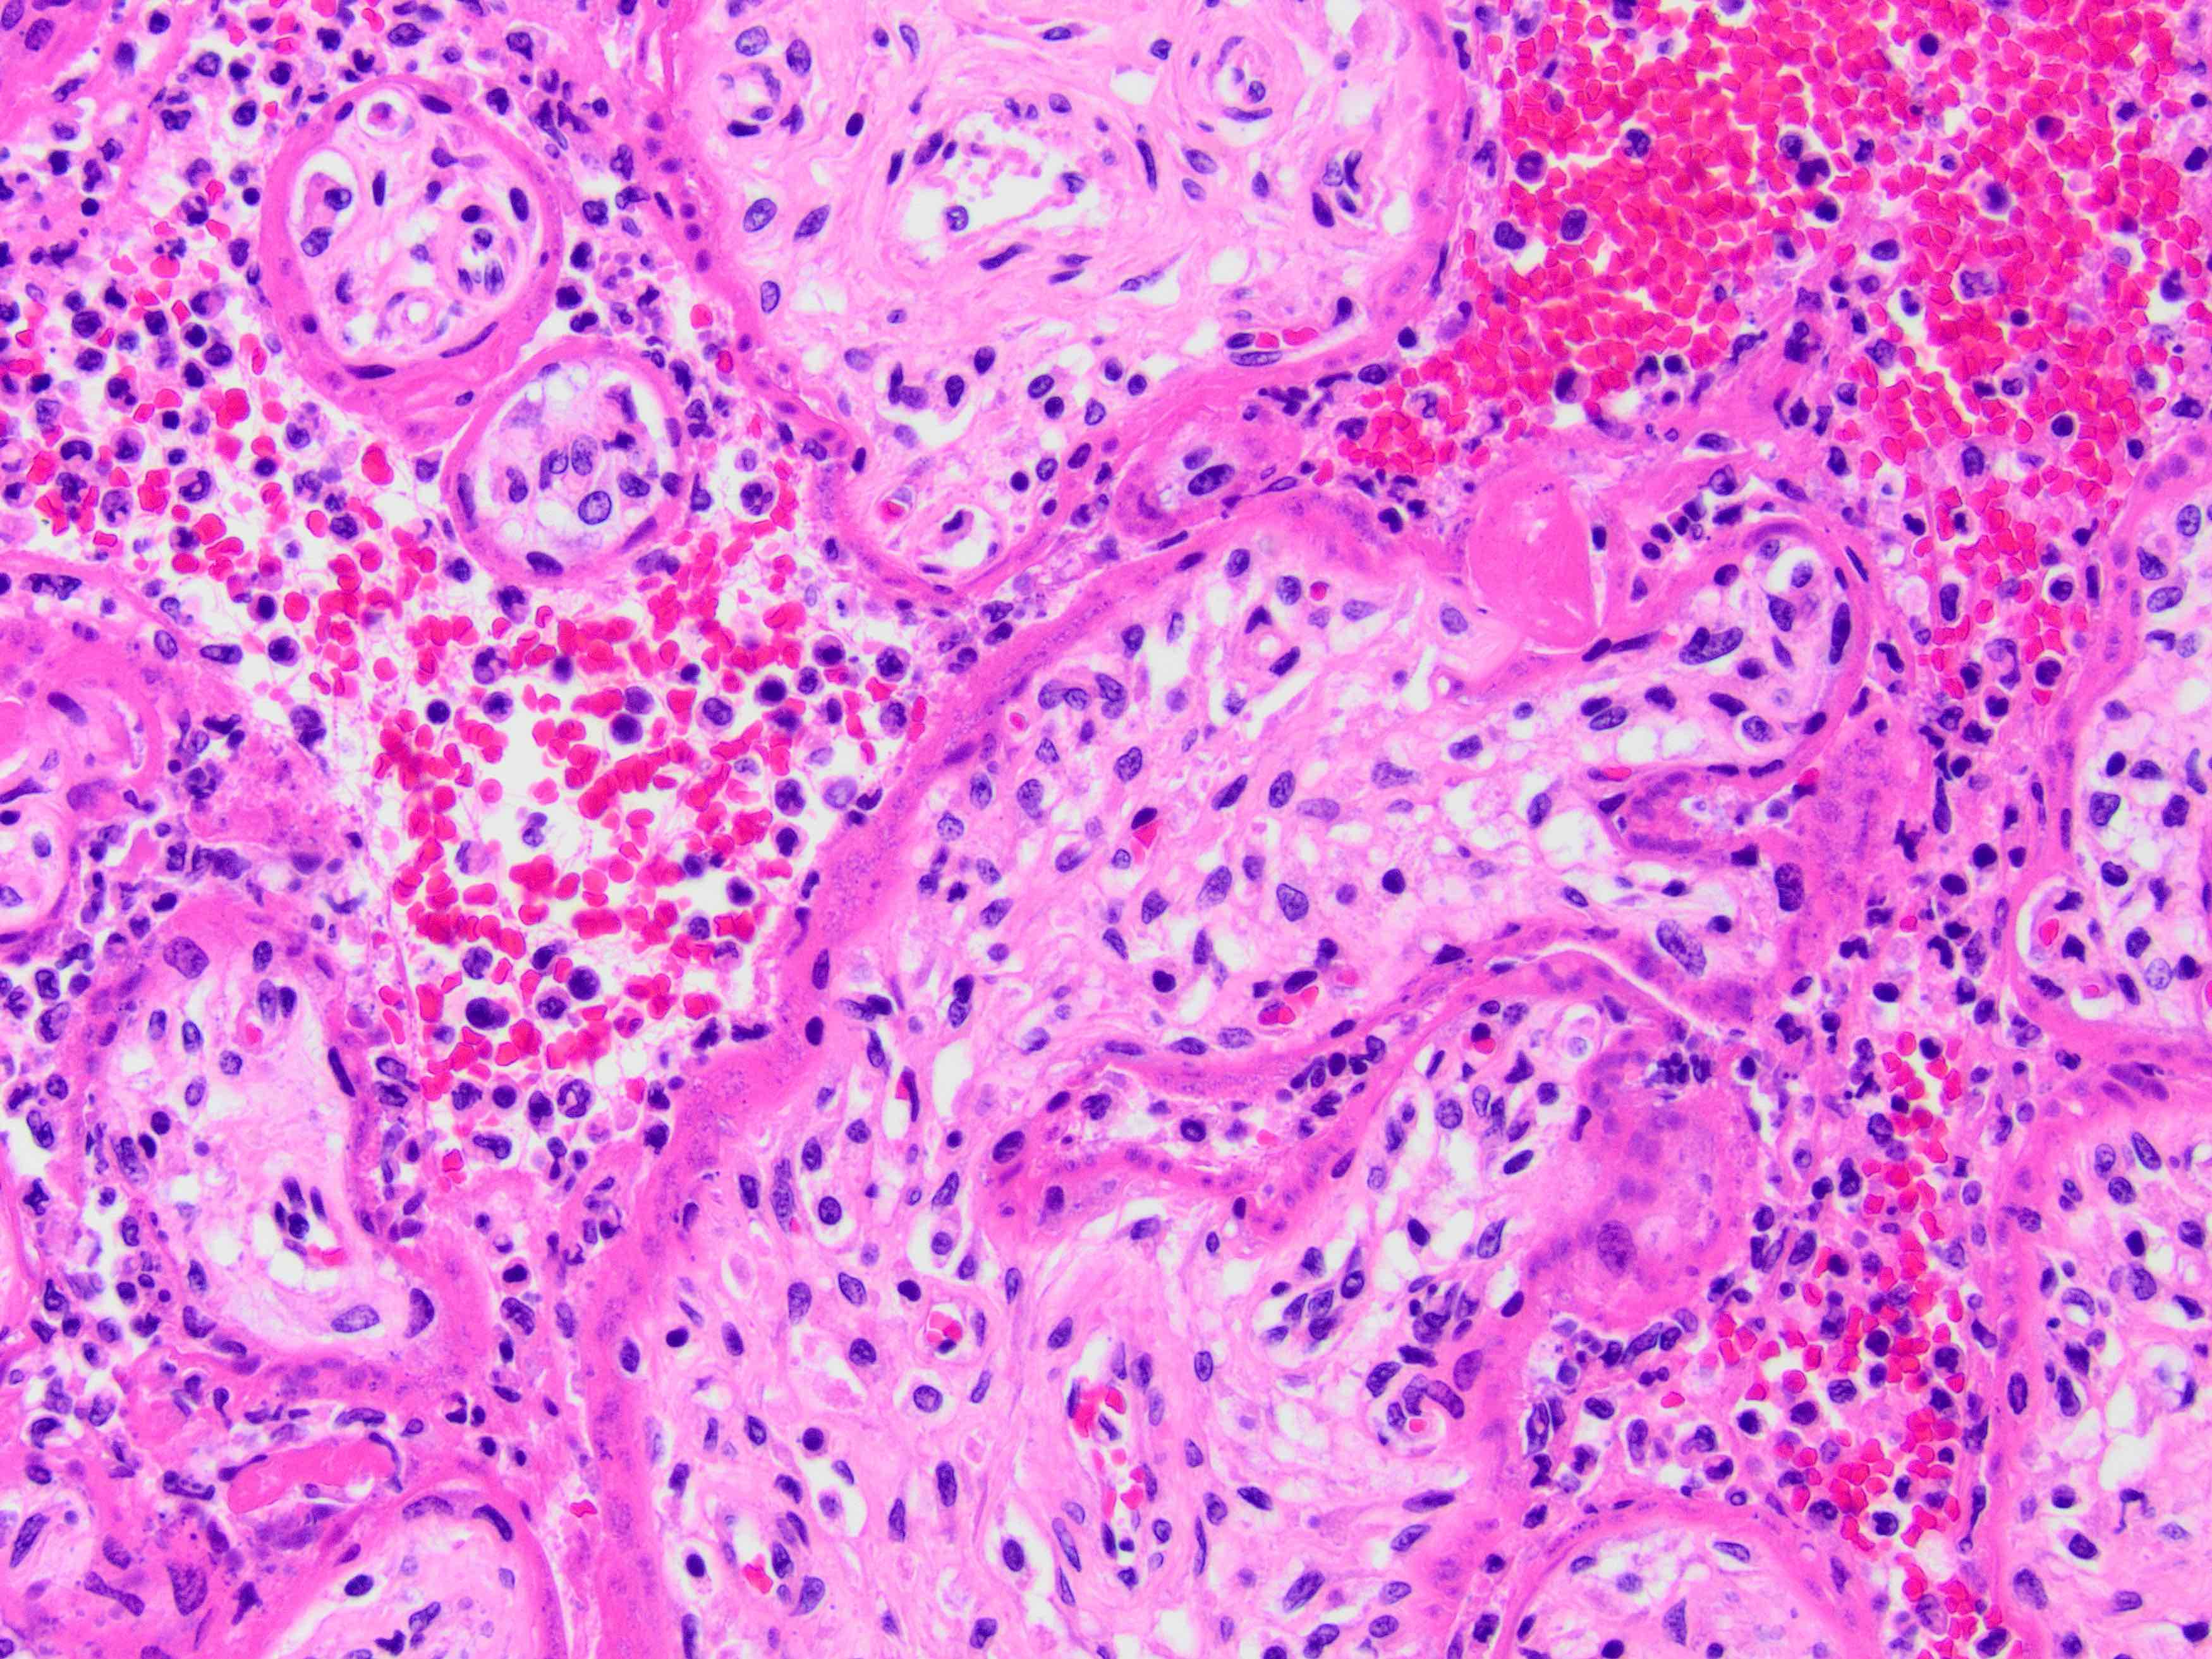 Chronic intervillositis and trophoblast necrosis